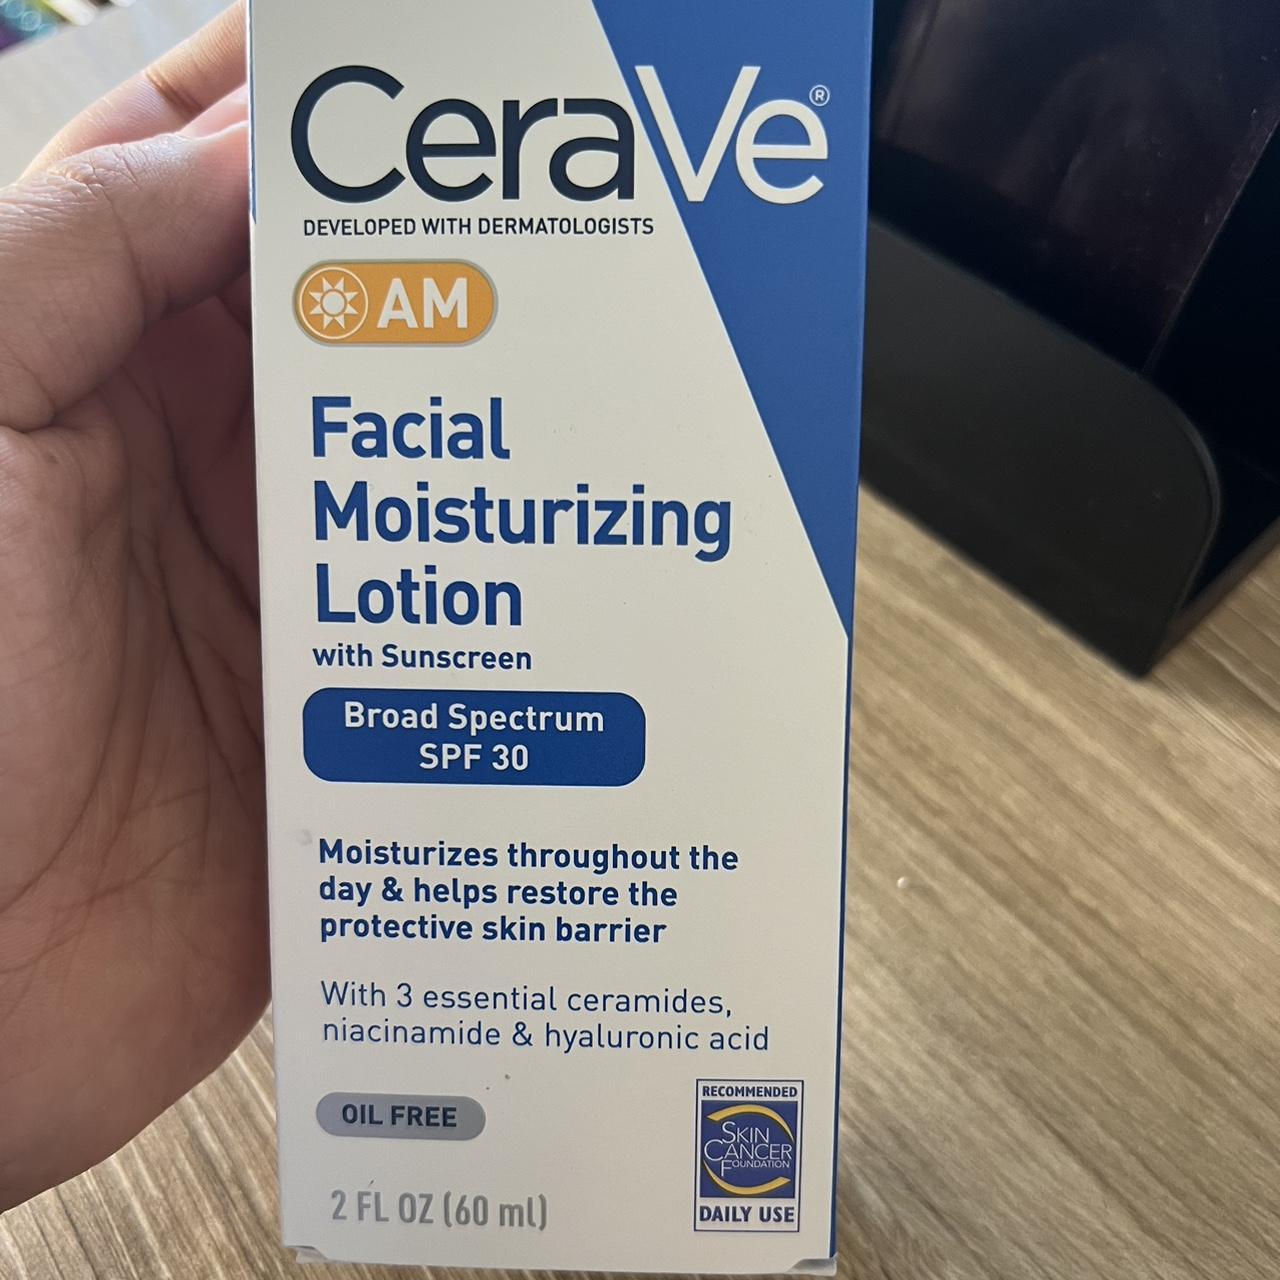 CeraVe Blue and White Skincare